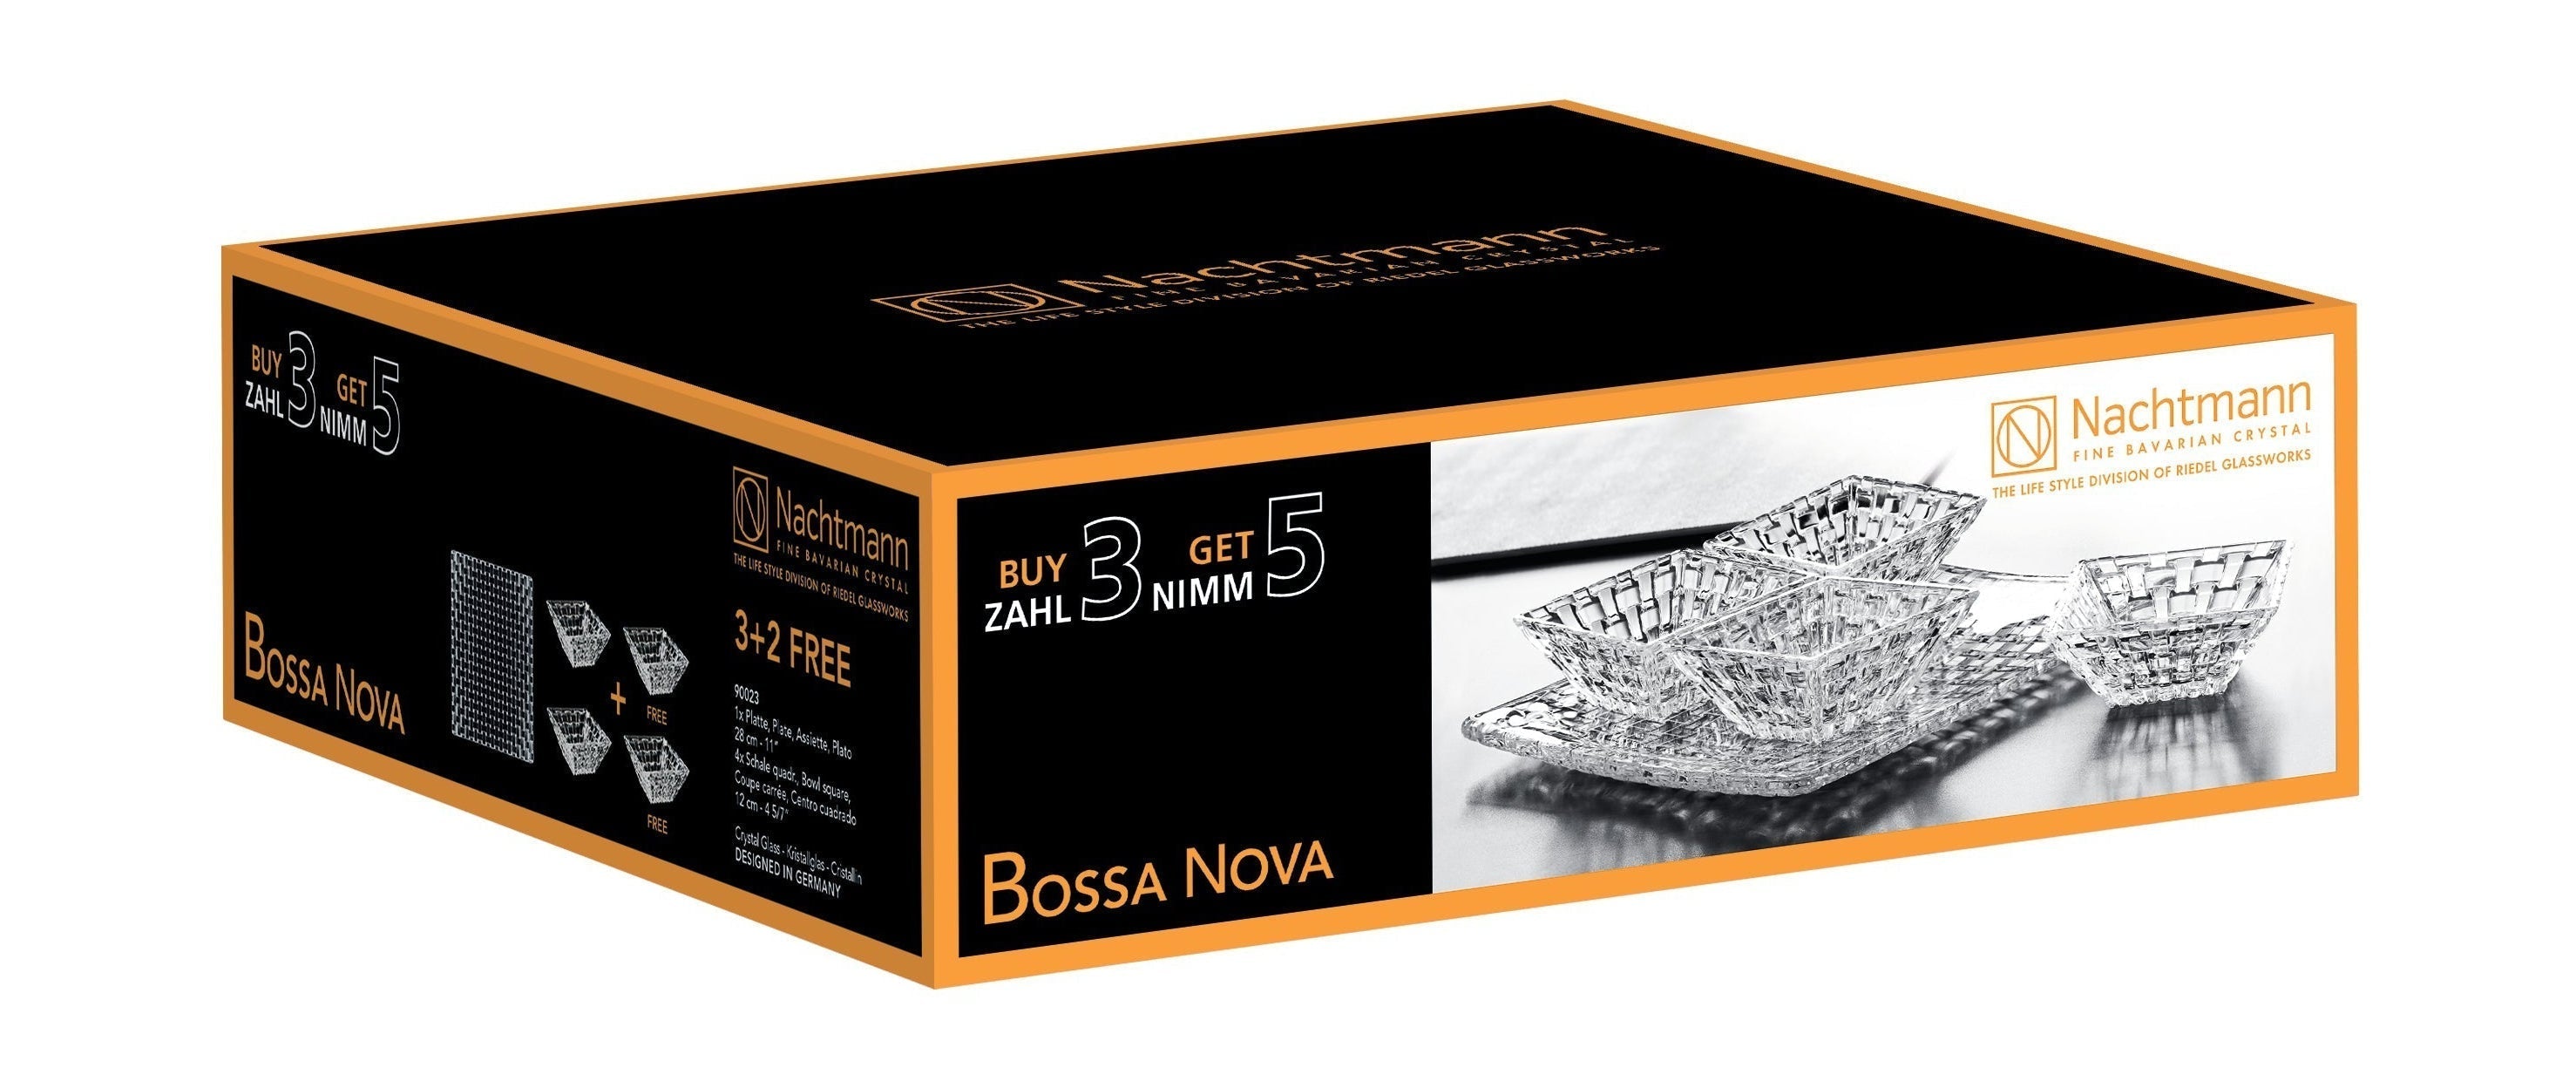 Nachtmann Bossa Nova Plate and Bowl Advantage Set, Sarja 5